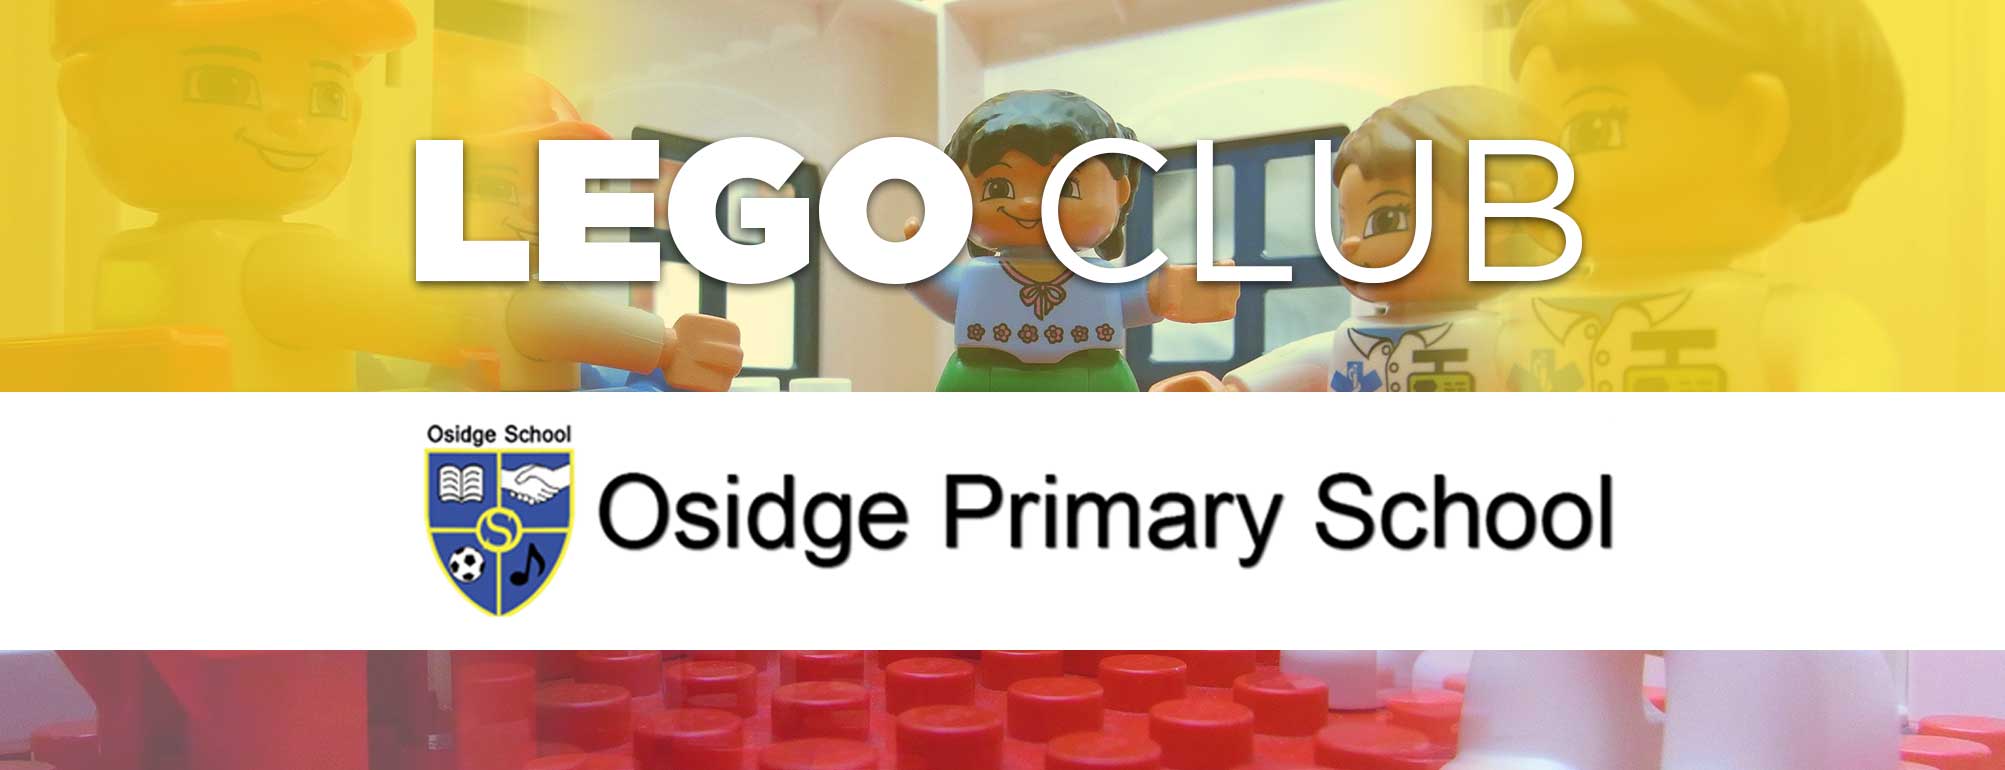 Lego Engineering Club - Osidge Primary School - April to July 2018